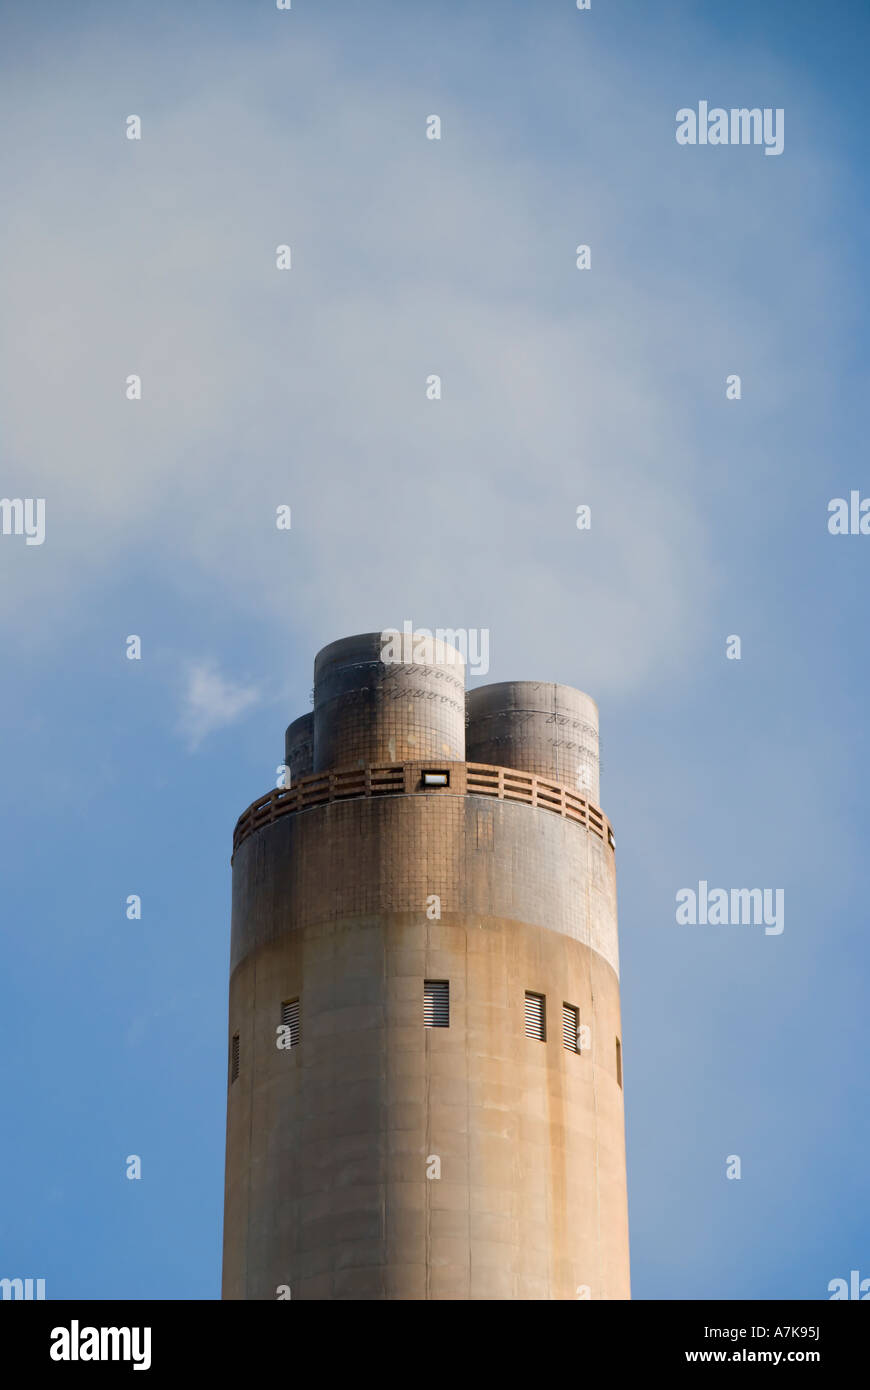 A smoking power  station chimney  stack on a plain blue sky - Aberthaw Power Station, South Wales. UK. Stock Photo